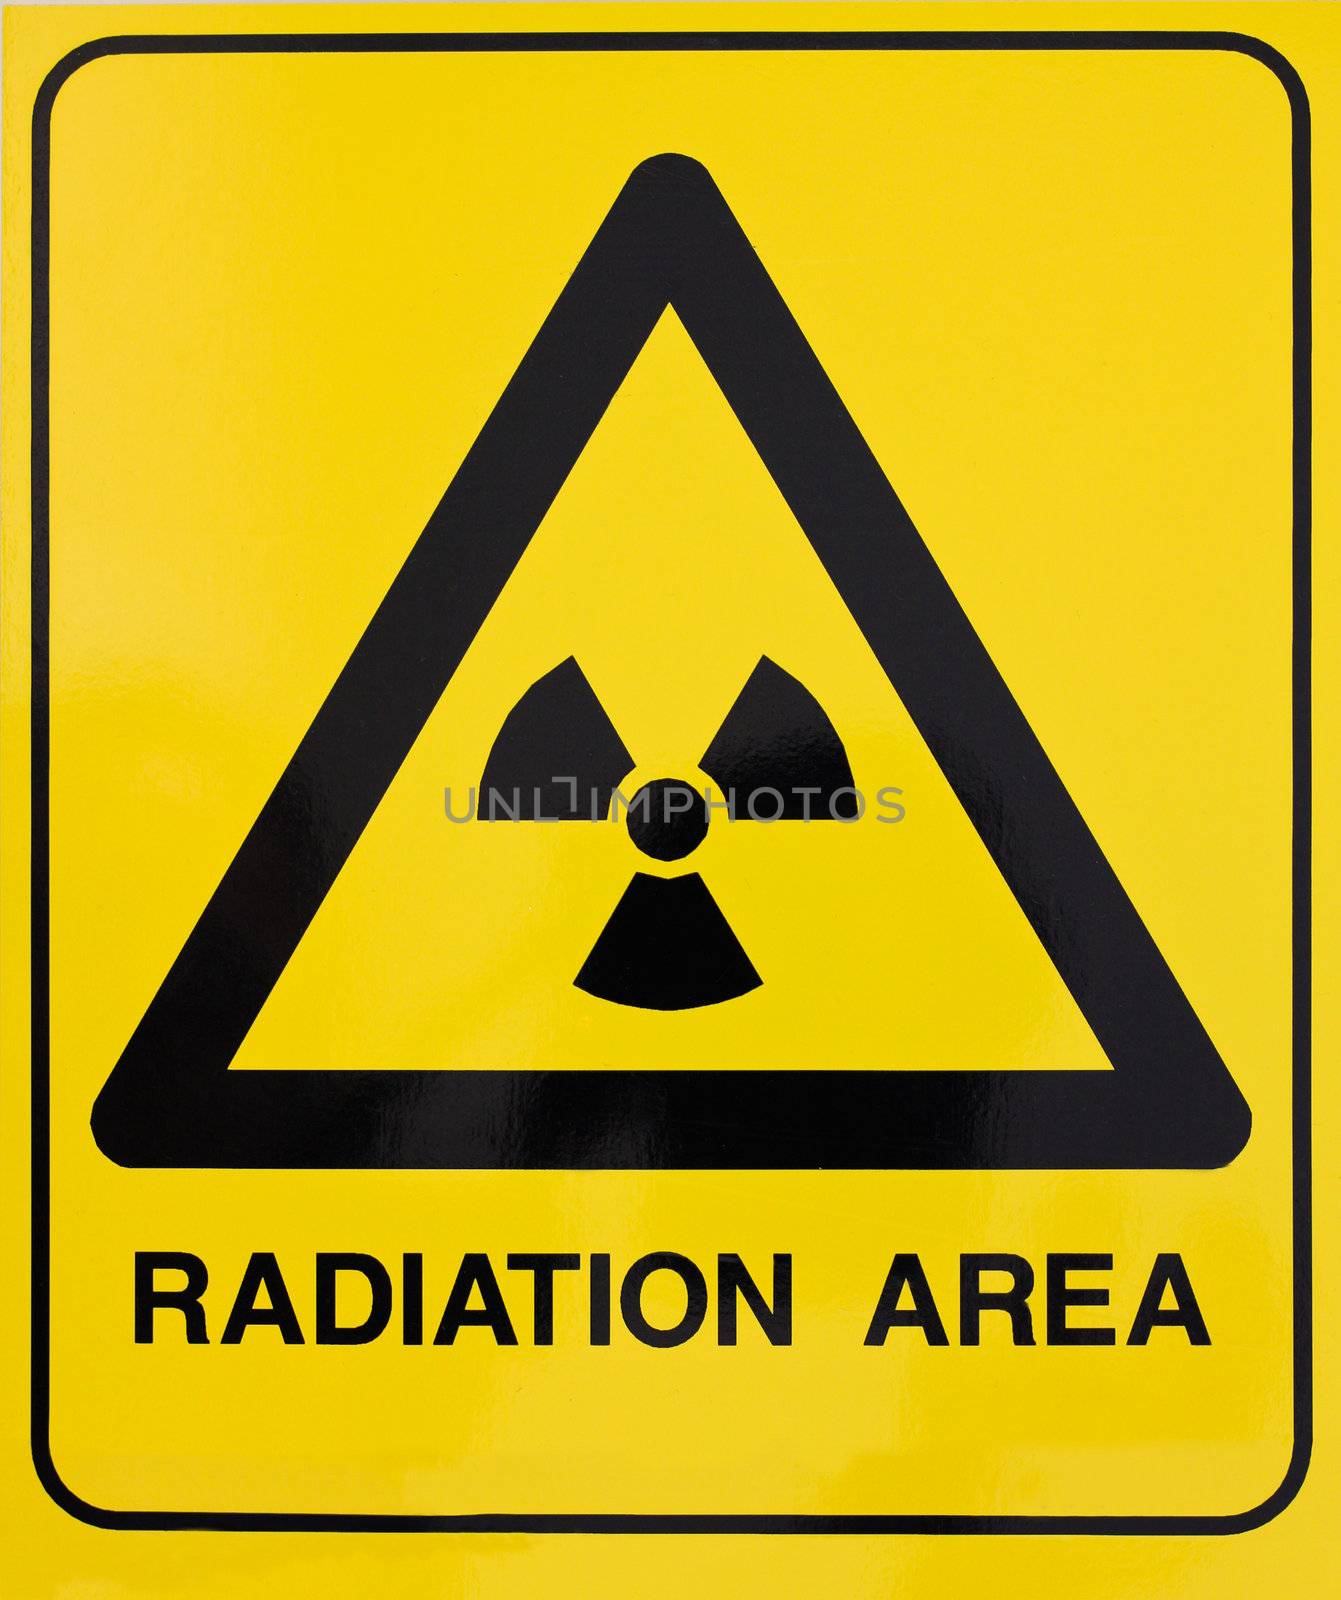 Nuclear radiation or radioactivity warning sign